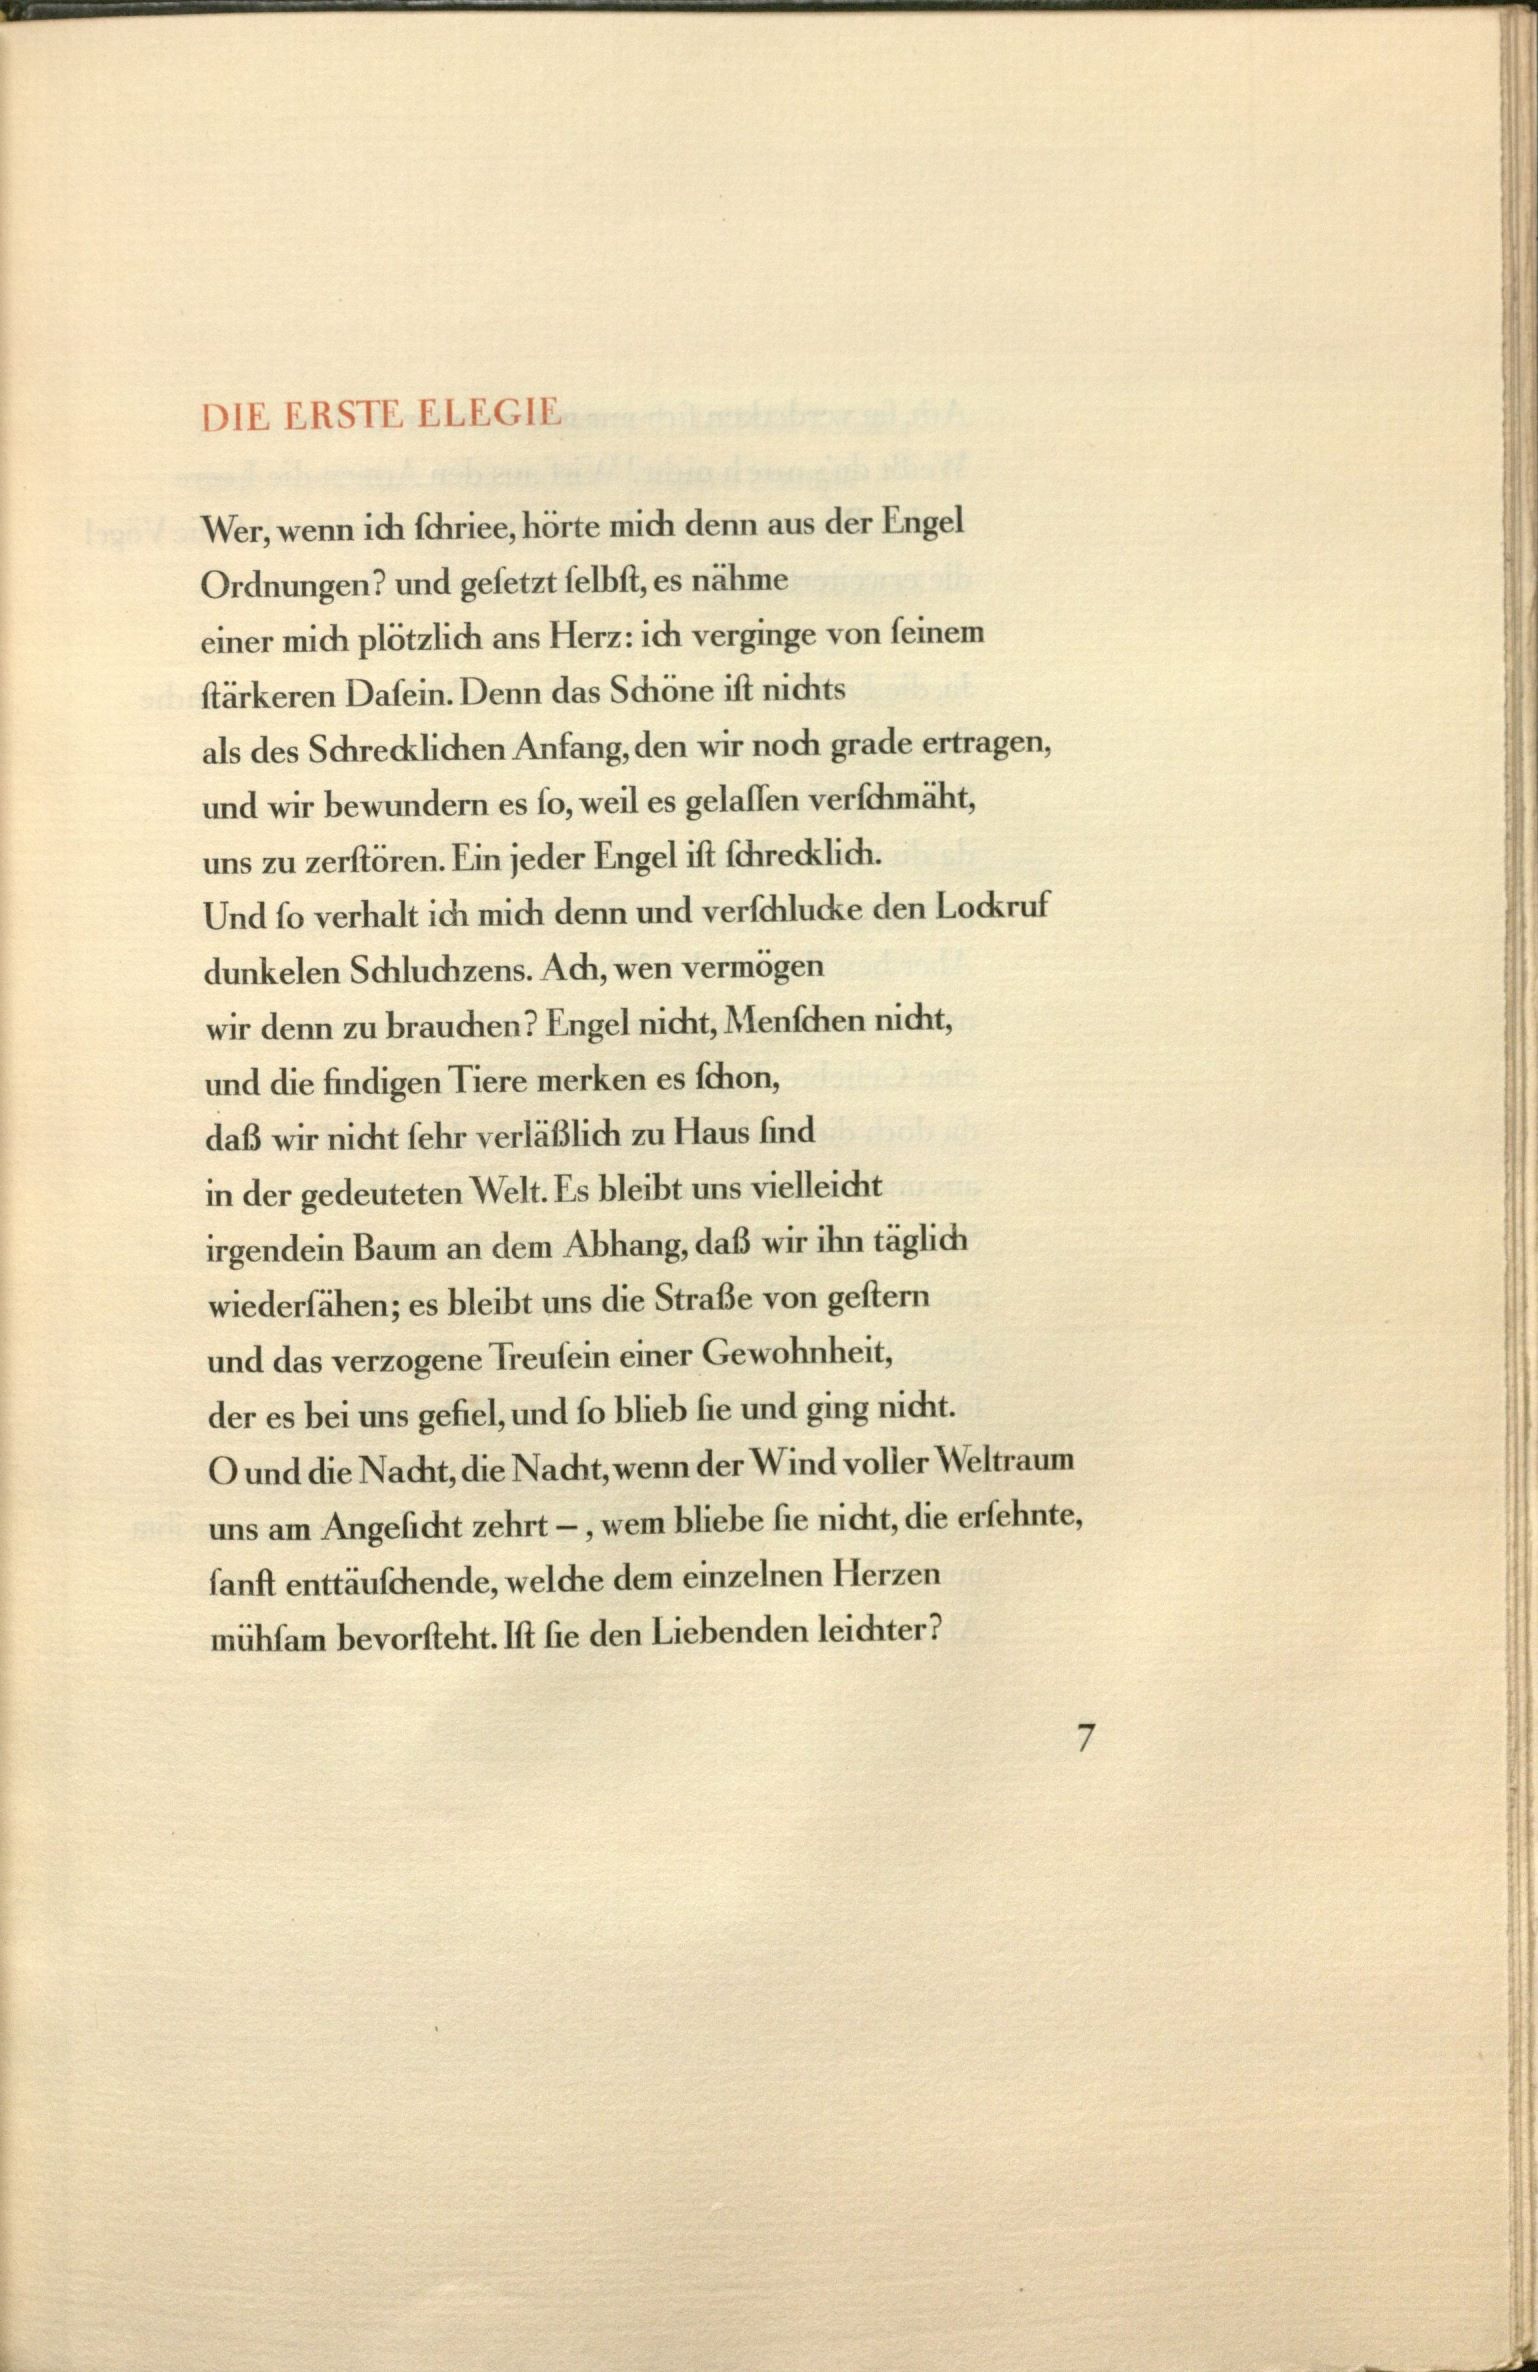 Rainer Maria Rilke’s Duineser Elegien, Leipzig: im Insel-Verlag, 1923: “Die Erste Elegie”. Special Collections, call number: Rilke Z50.